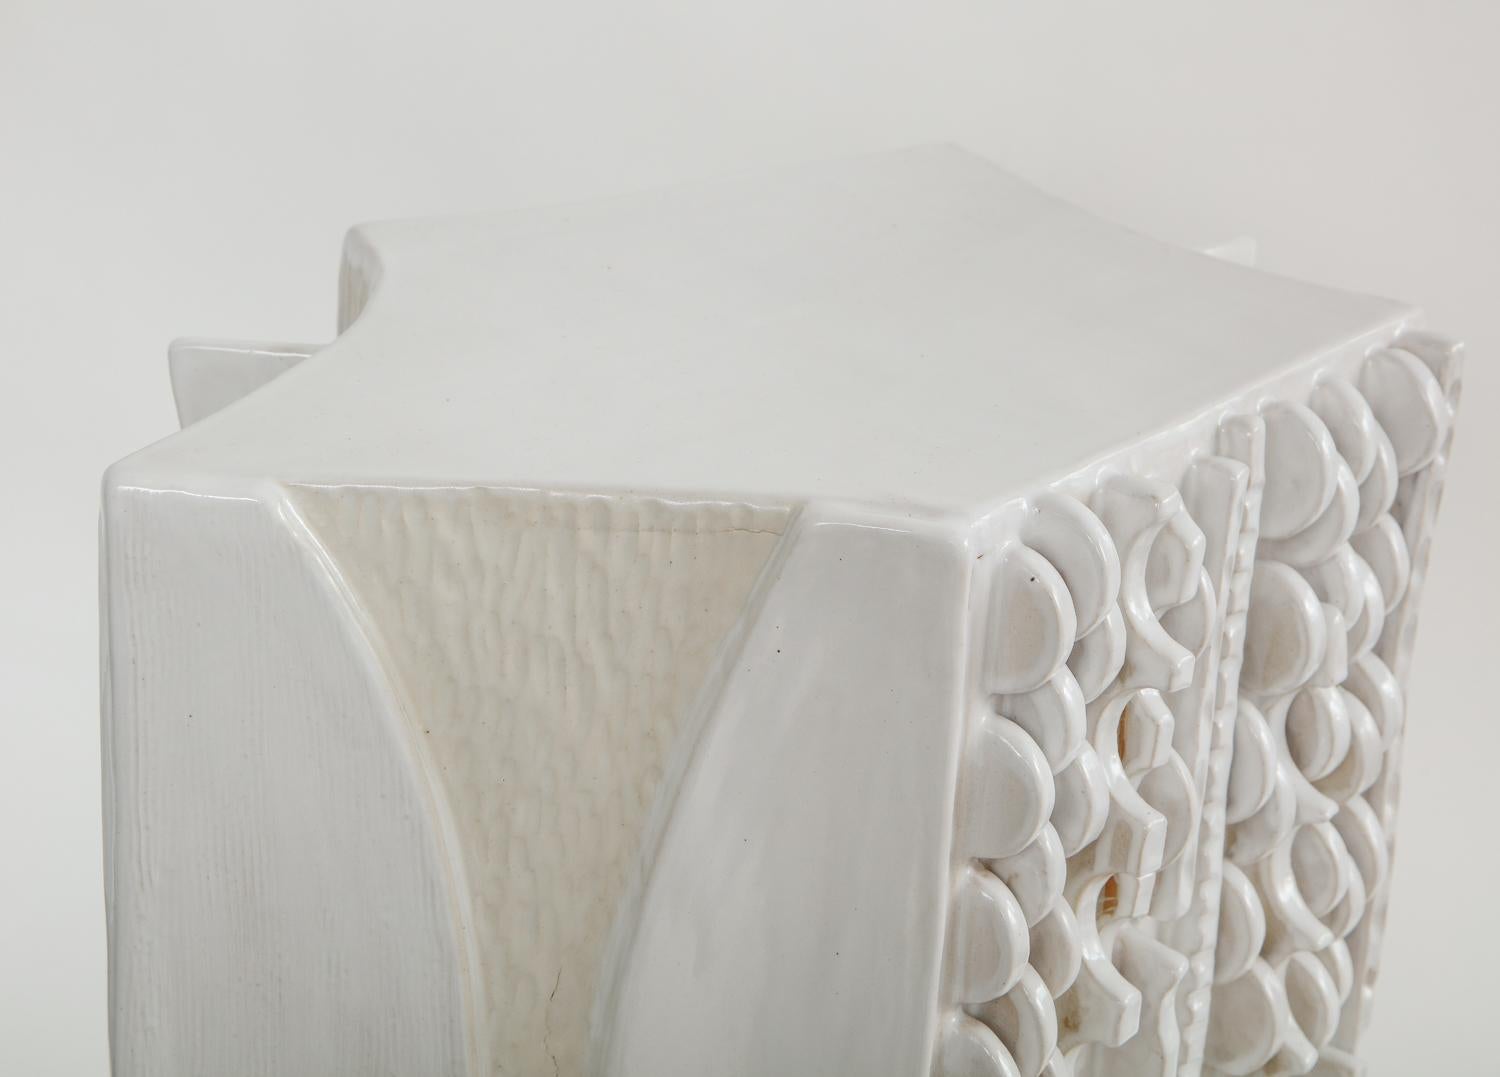 Moderno White Vessel in Glazed Ceramic by Trish DeMasi 1